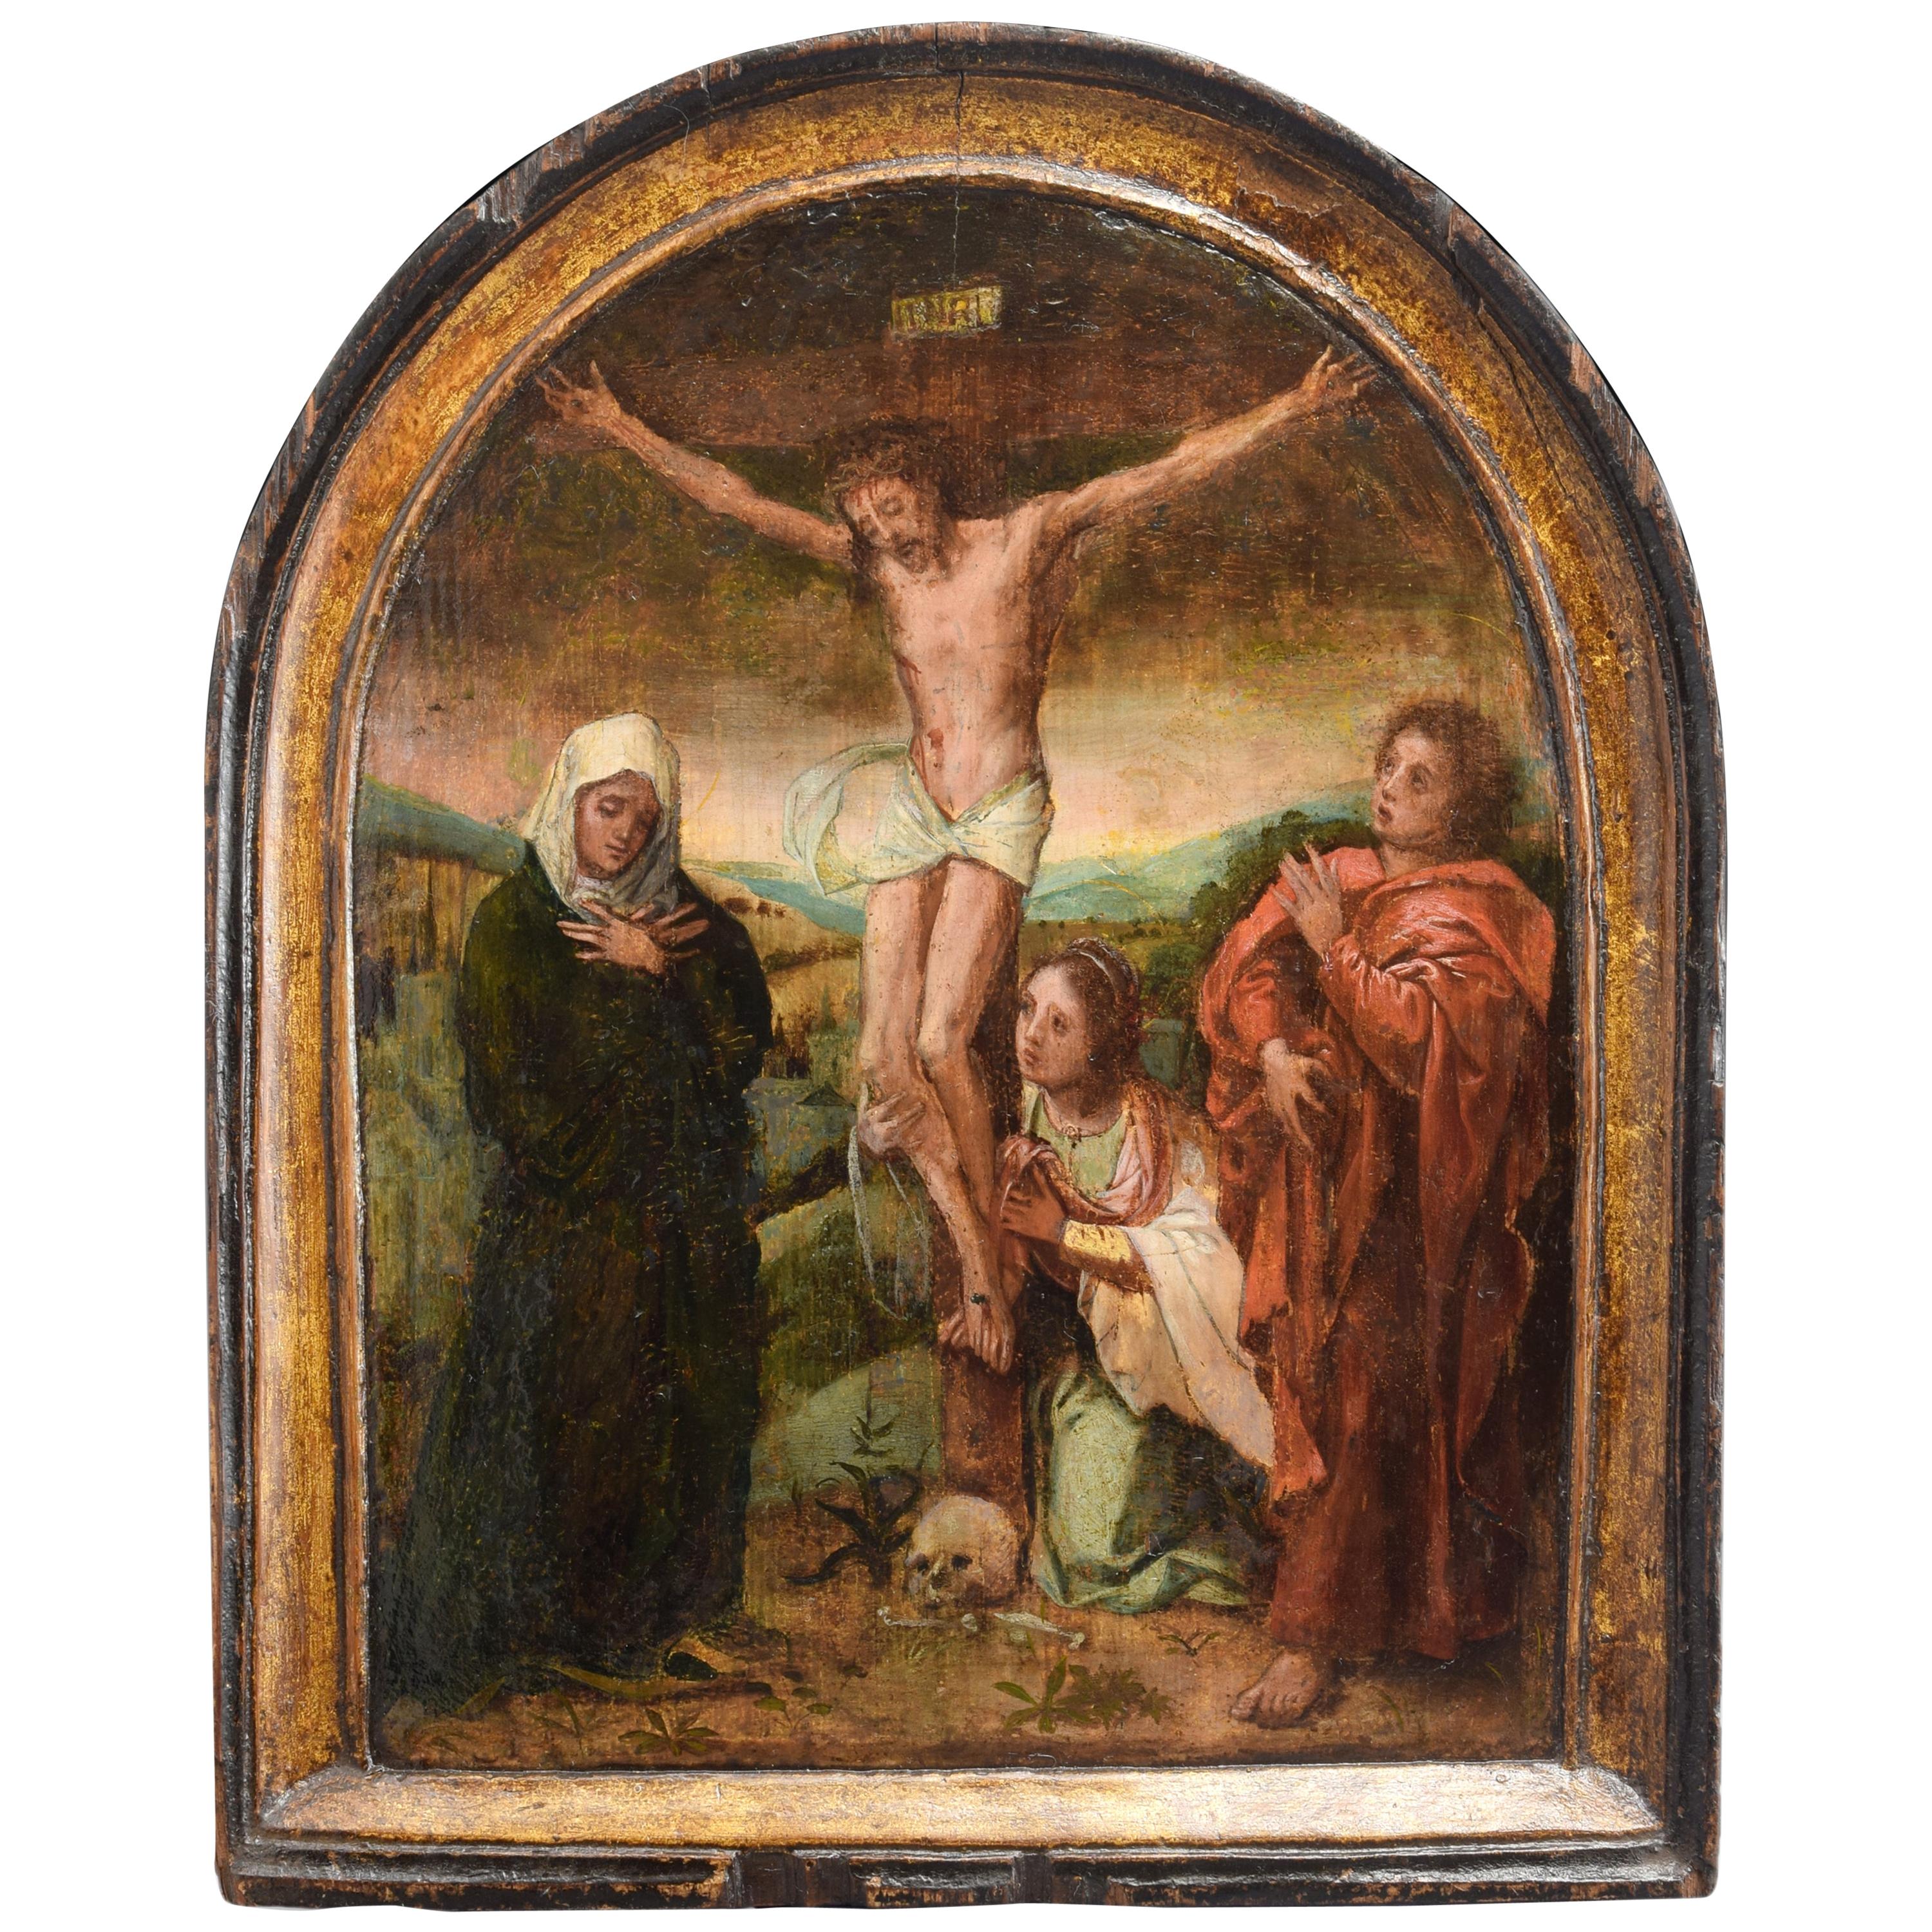 Crucifixion, Oil on Panel, Spanish-Flemish School, 16th Century